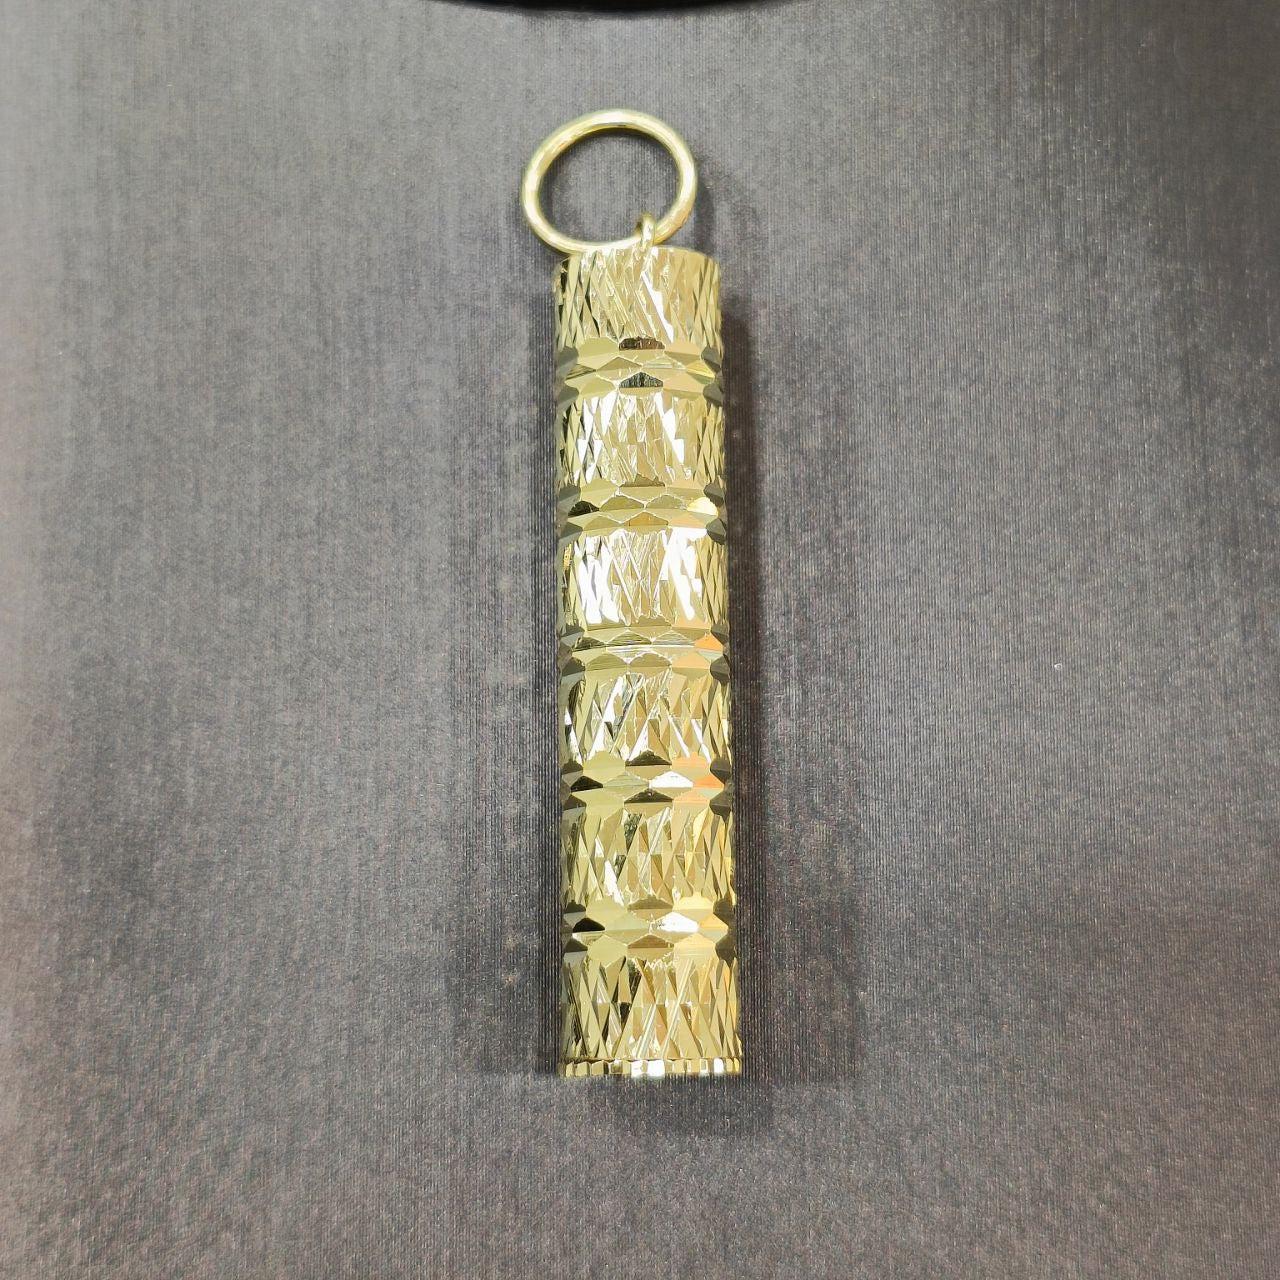 22k / 916 Gold Bamboo / Futong Pendant-Charms & Pendants-Best Gold Shop